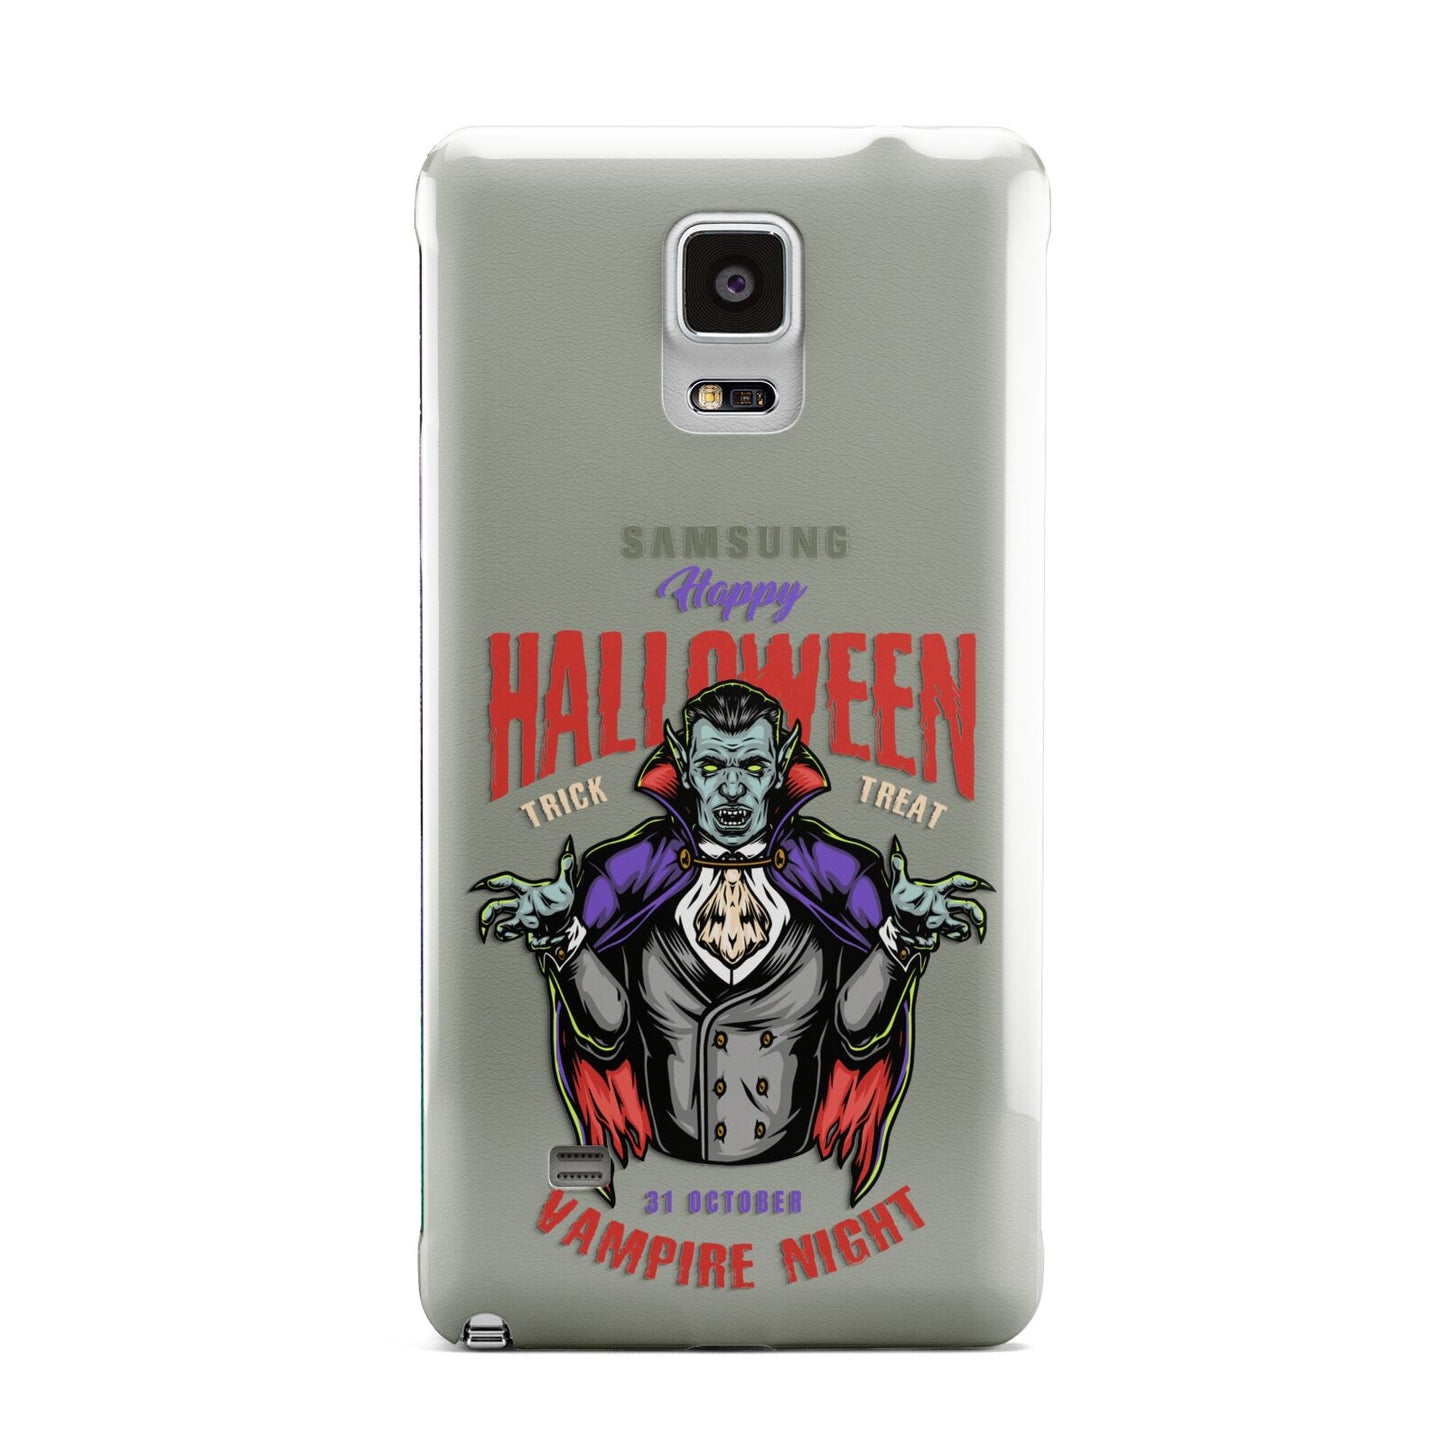 Vampire Night Samsung Galaxy Note 4 Case